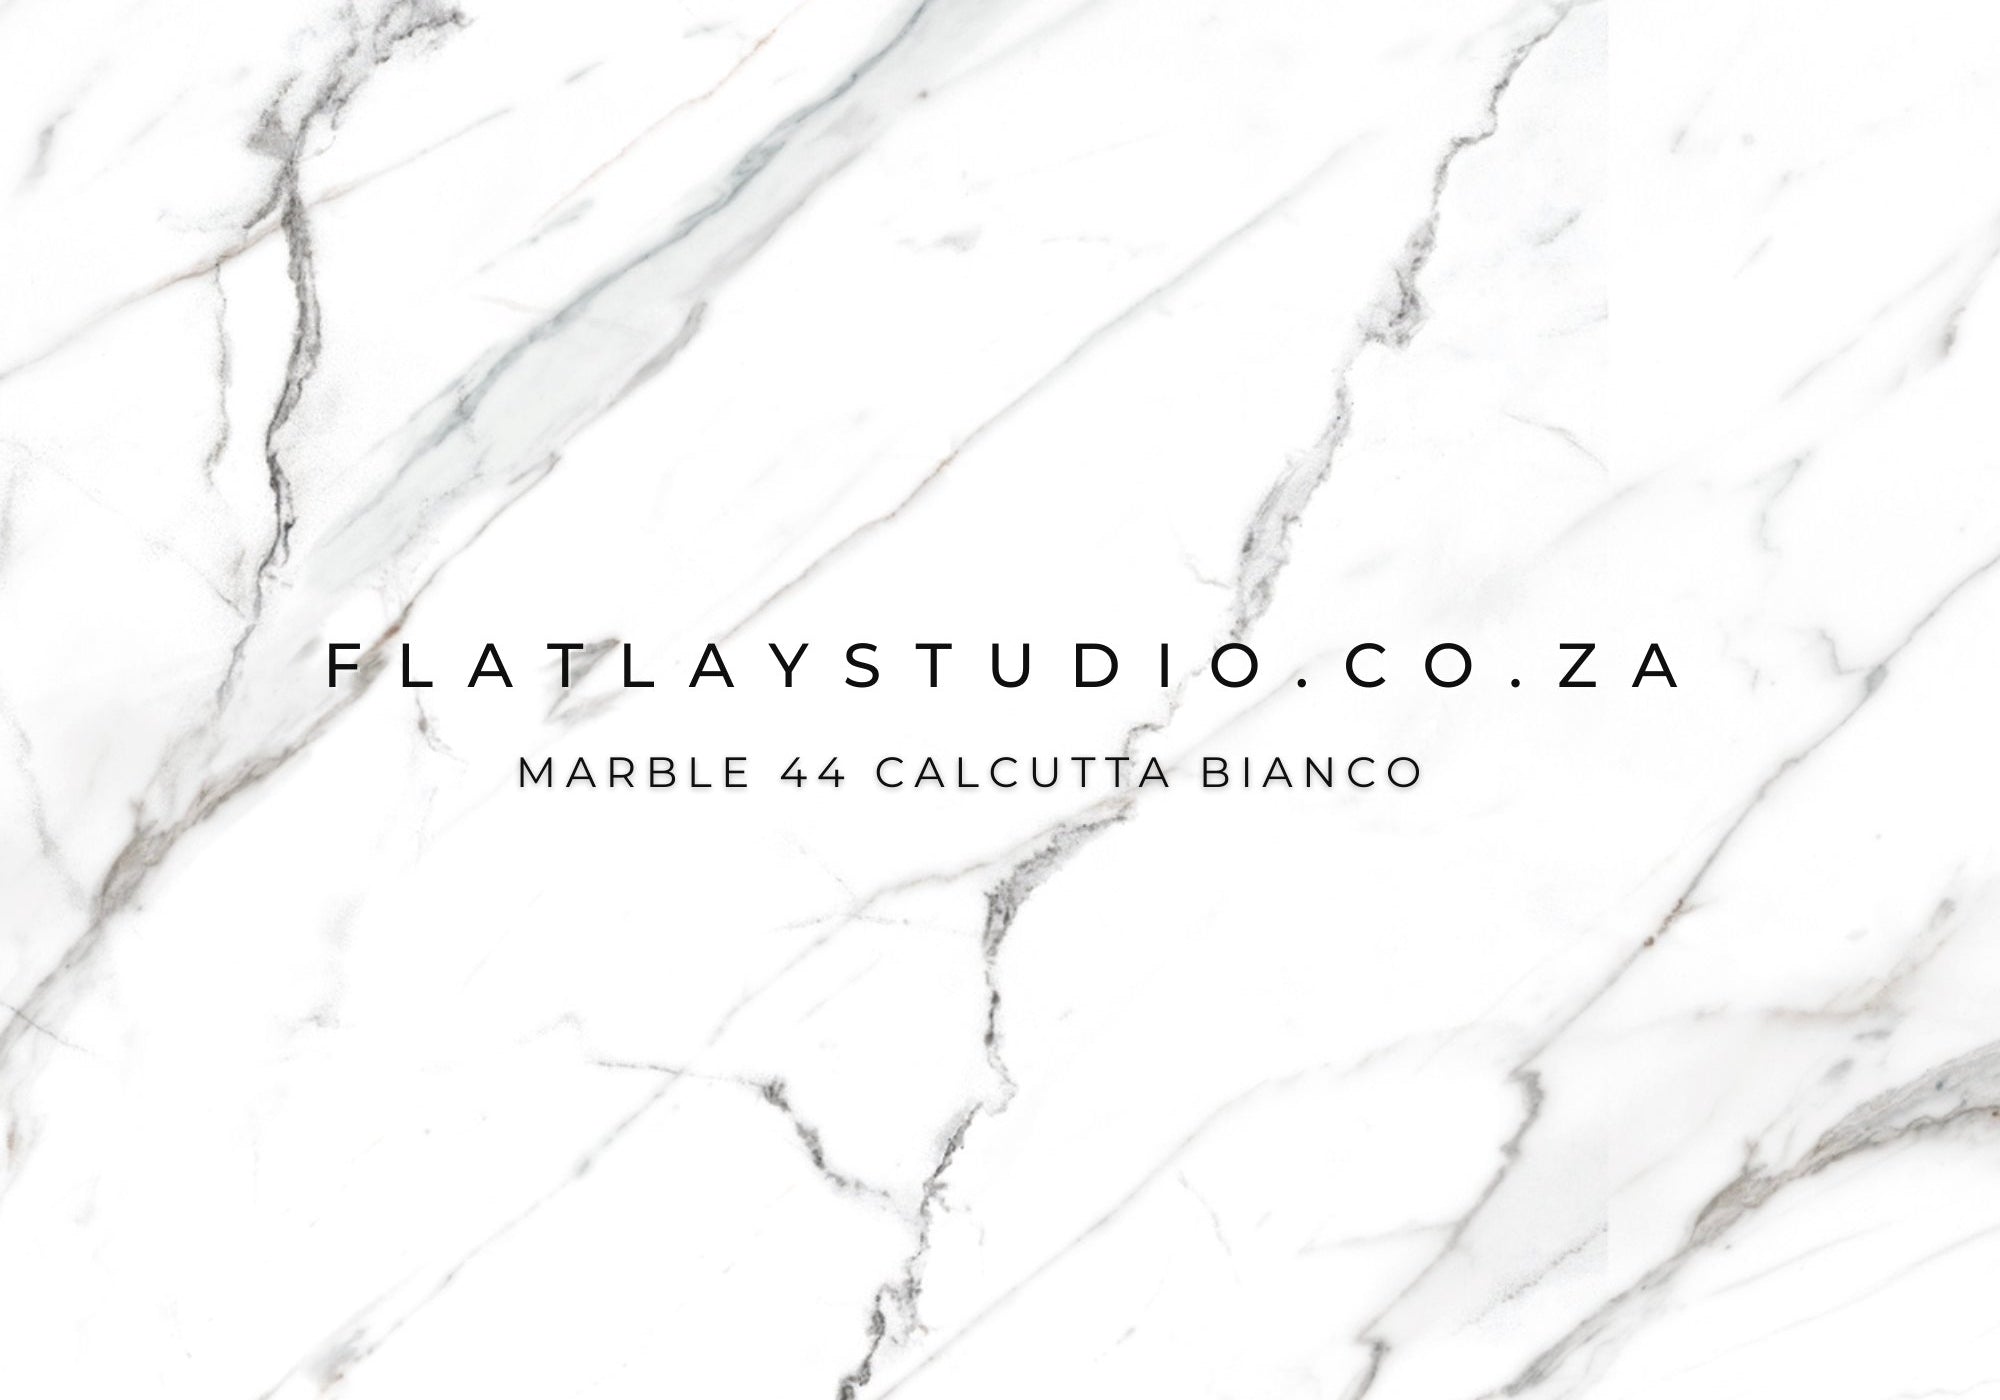 Marble 44 Calcutta Bianco - FlatlayStudio